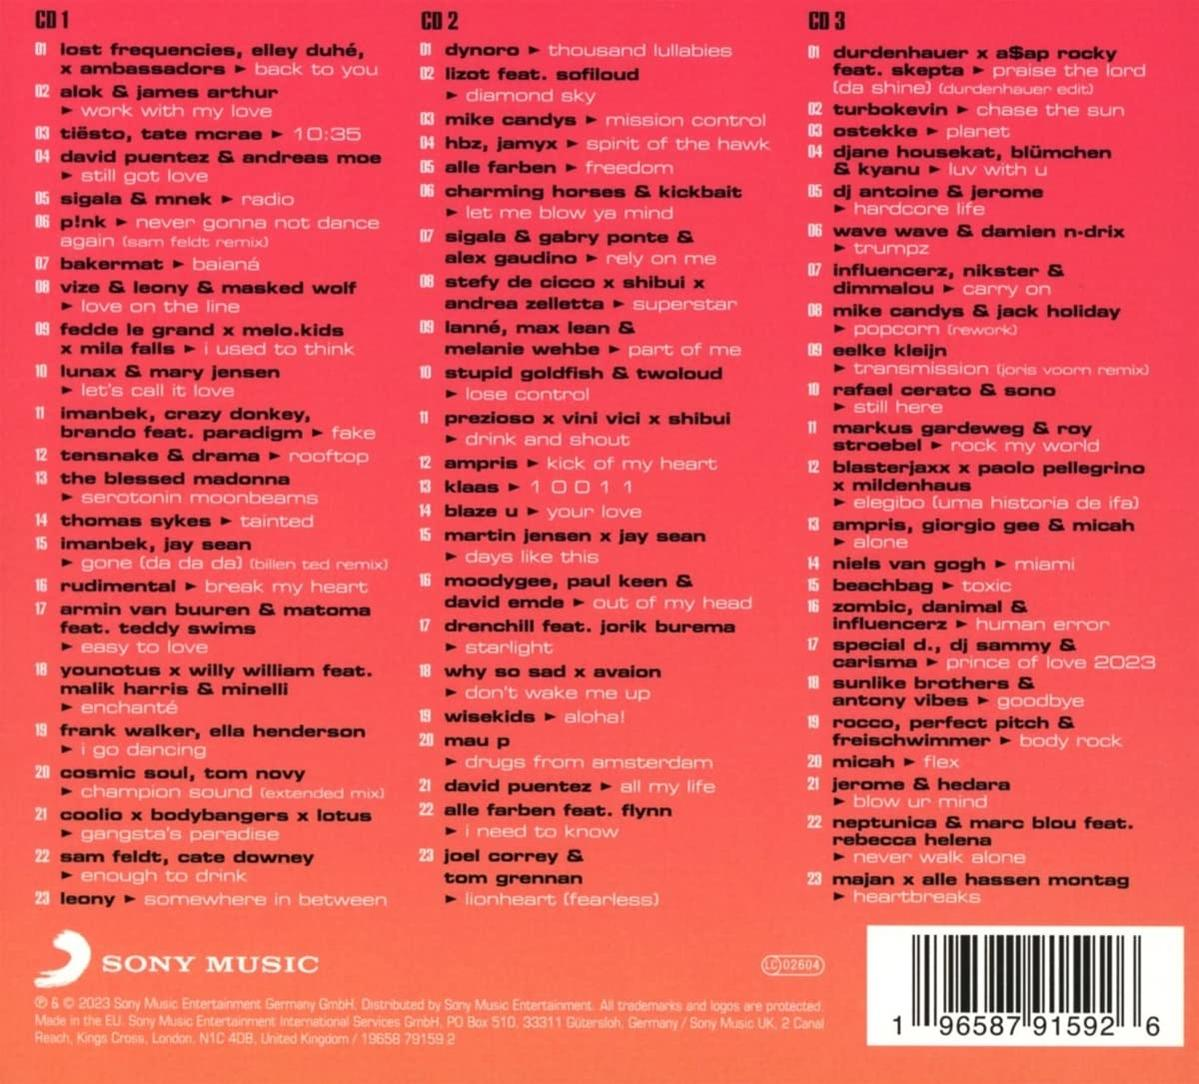 VARIOUS - Club Sounds Vol.101 (CD) 